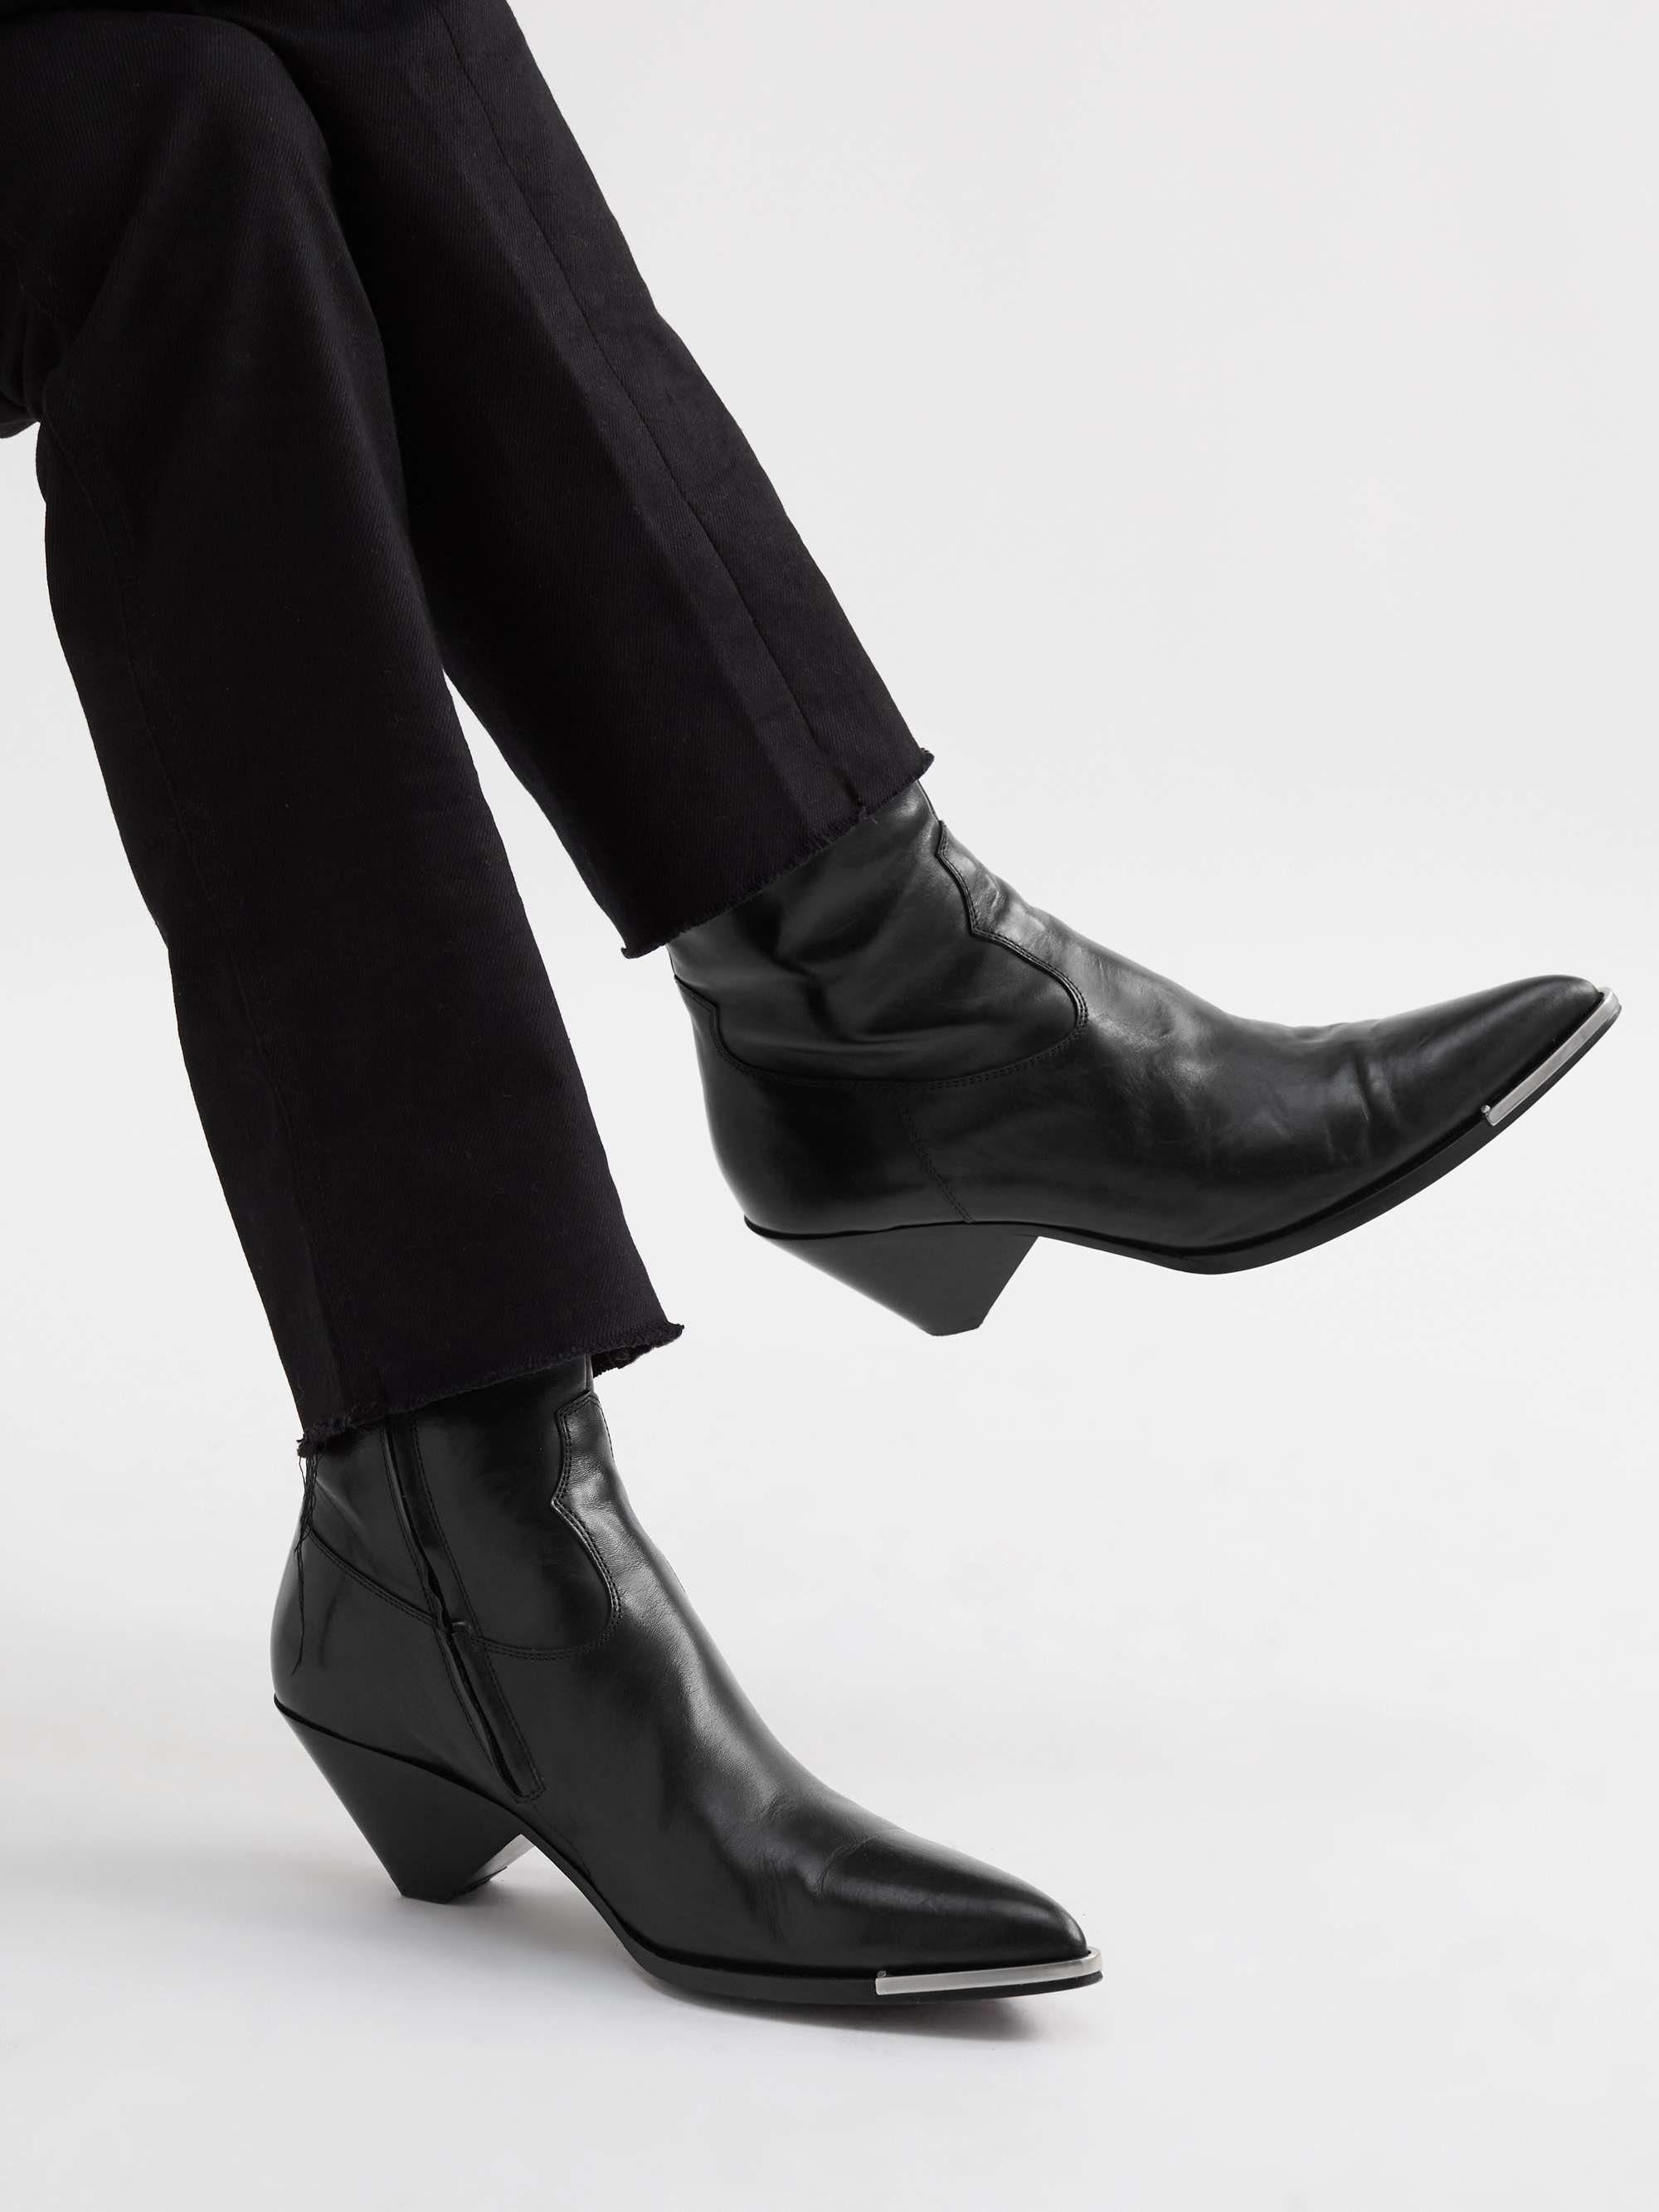 CELINE HOMME Leather Western Boots | MR PORTER